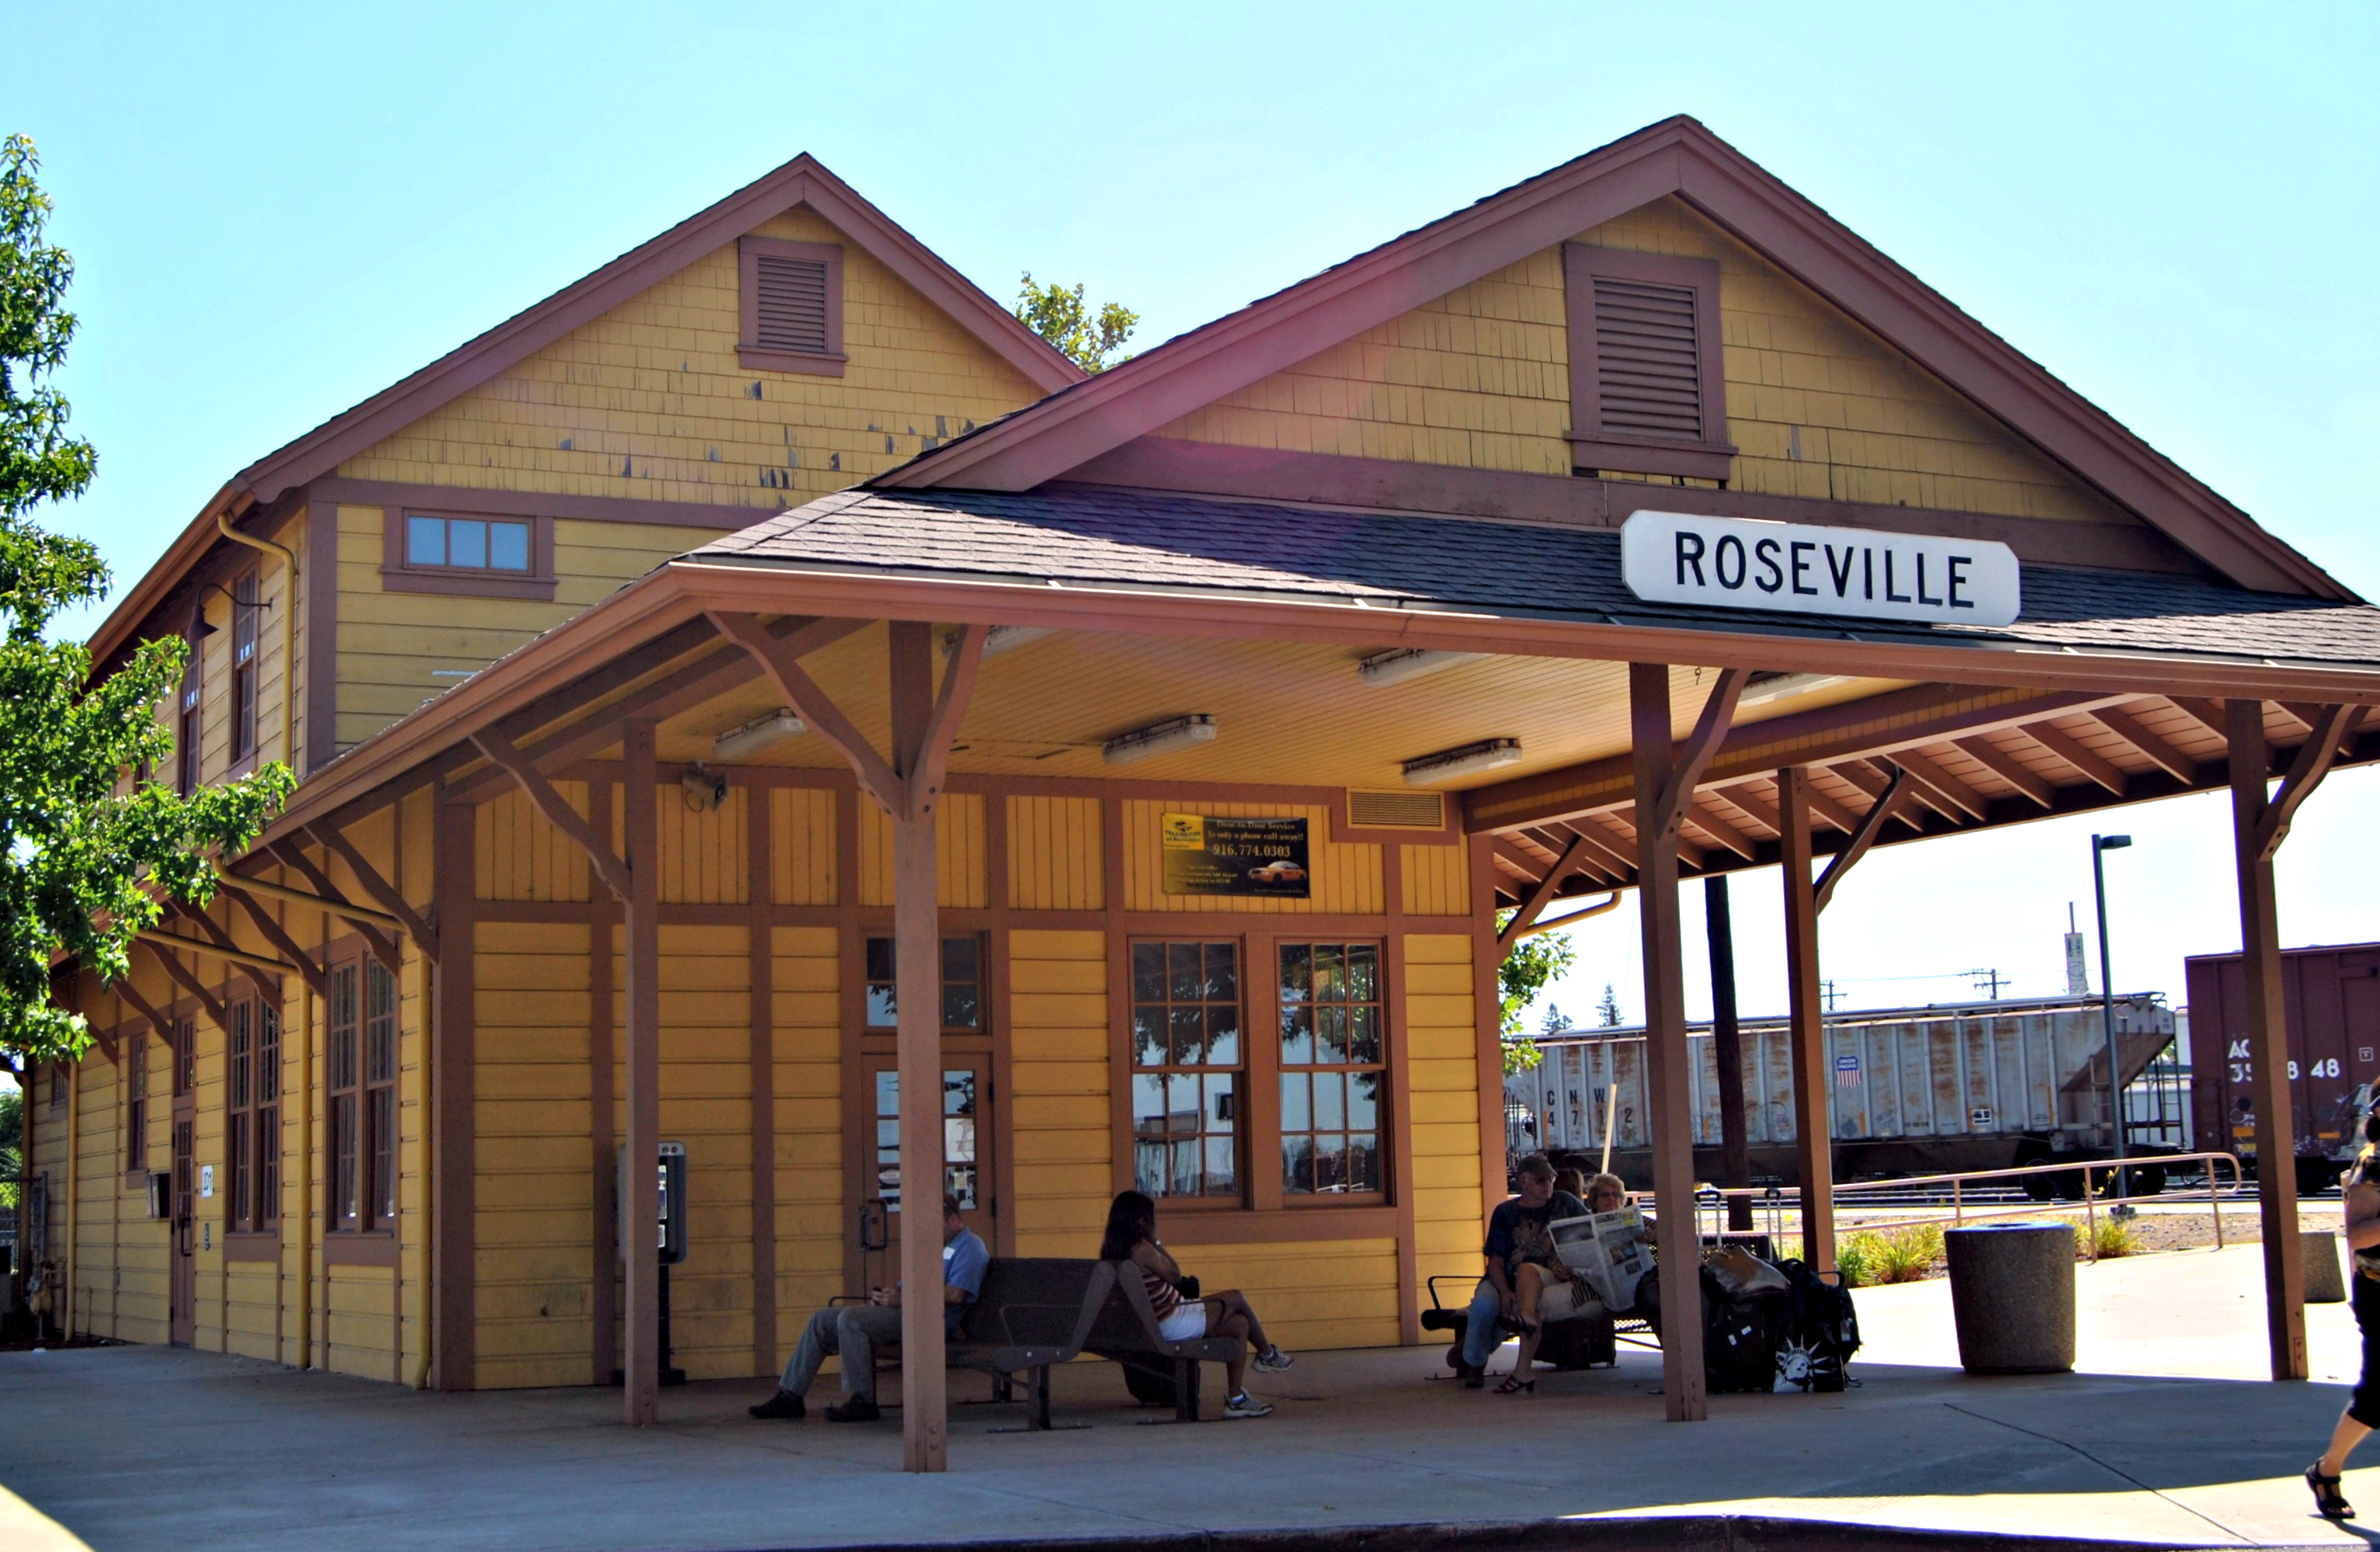 Roseville Local Area that offer bail bonds